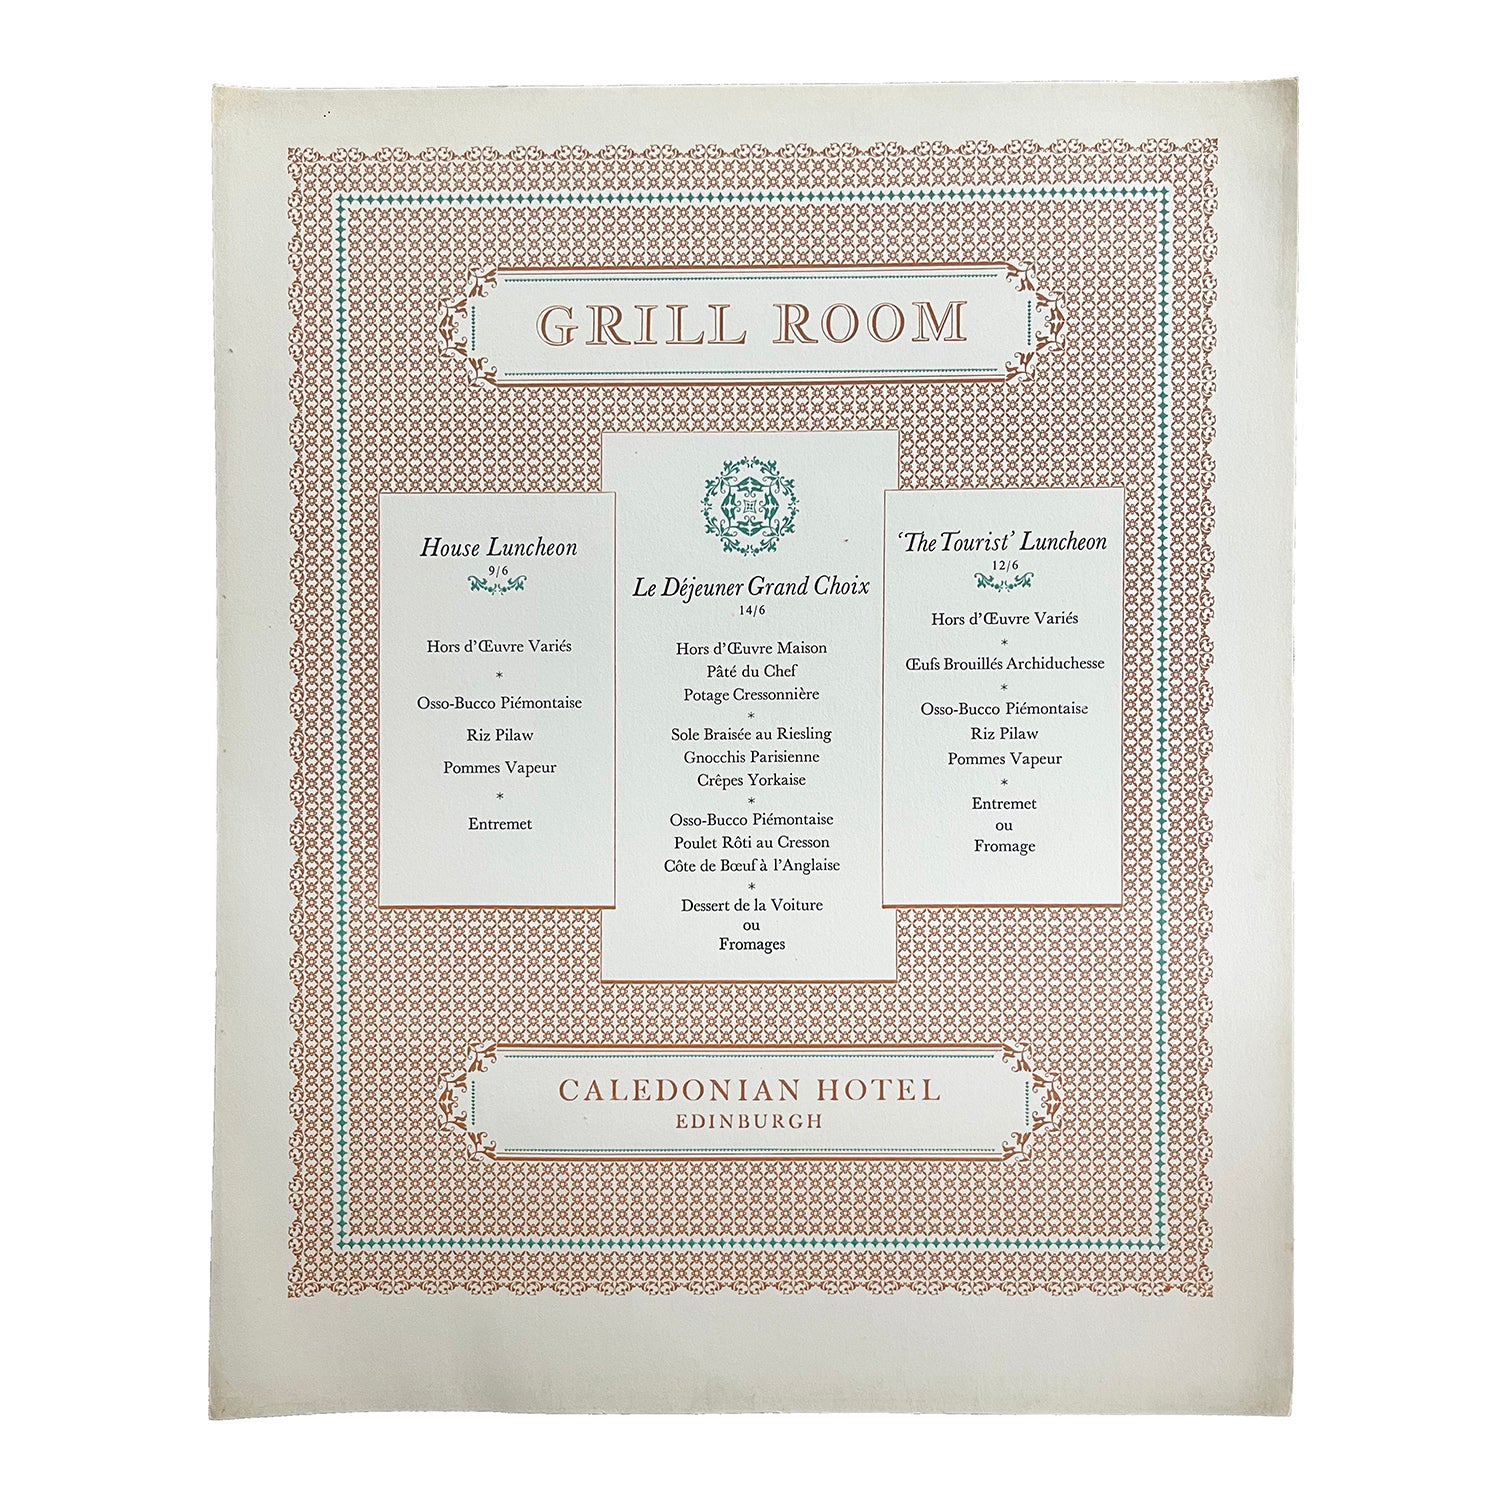 original menu for the Grill Room, Caledonian Hotel, Edinburgh, c. 1955.